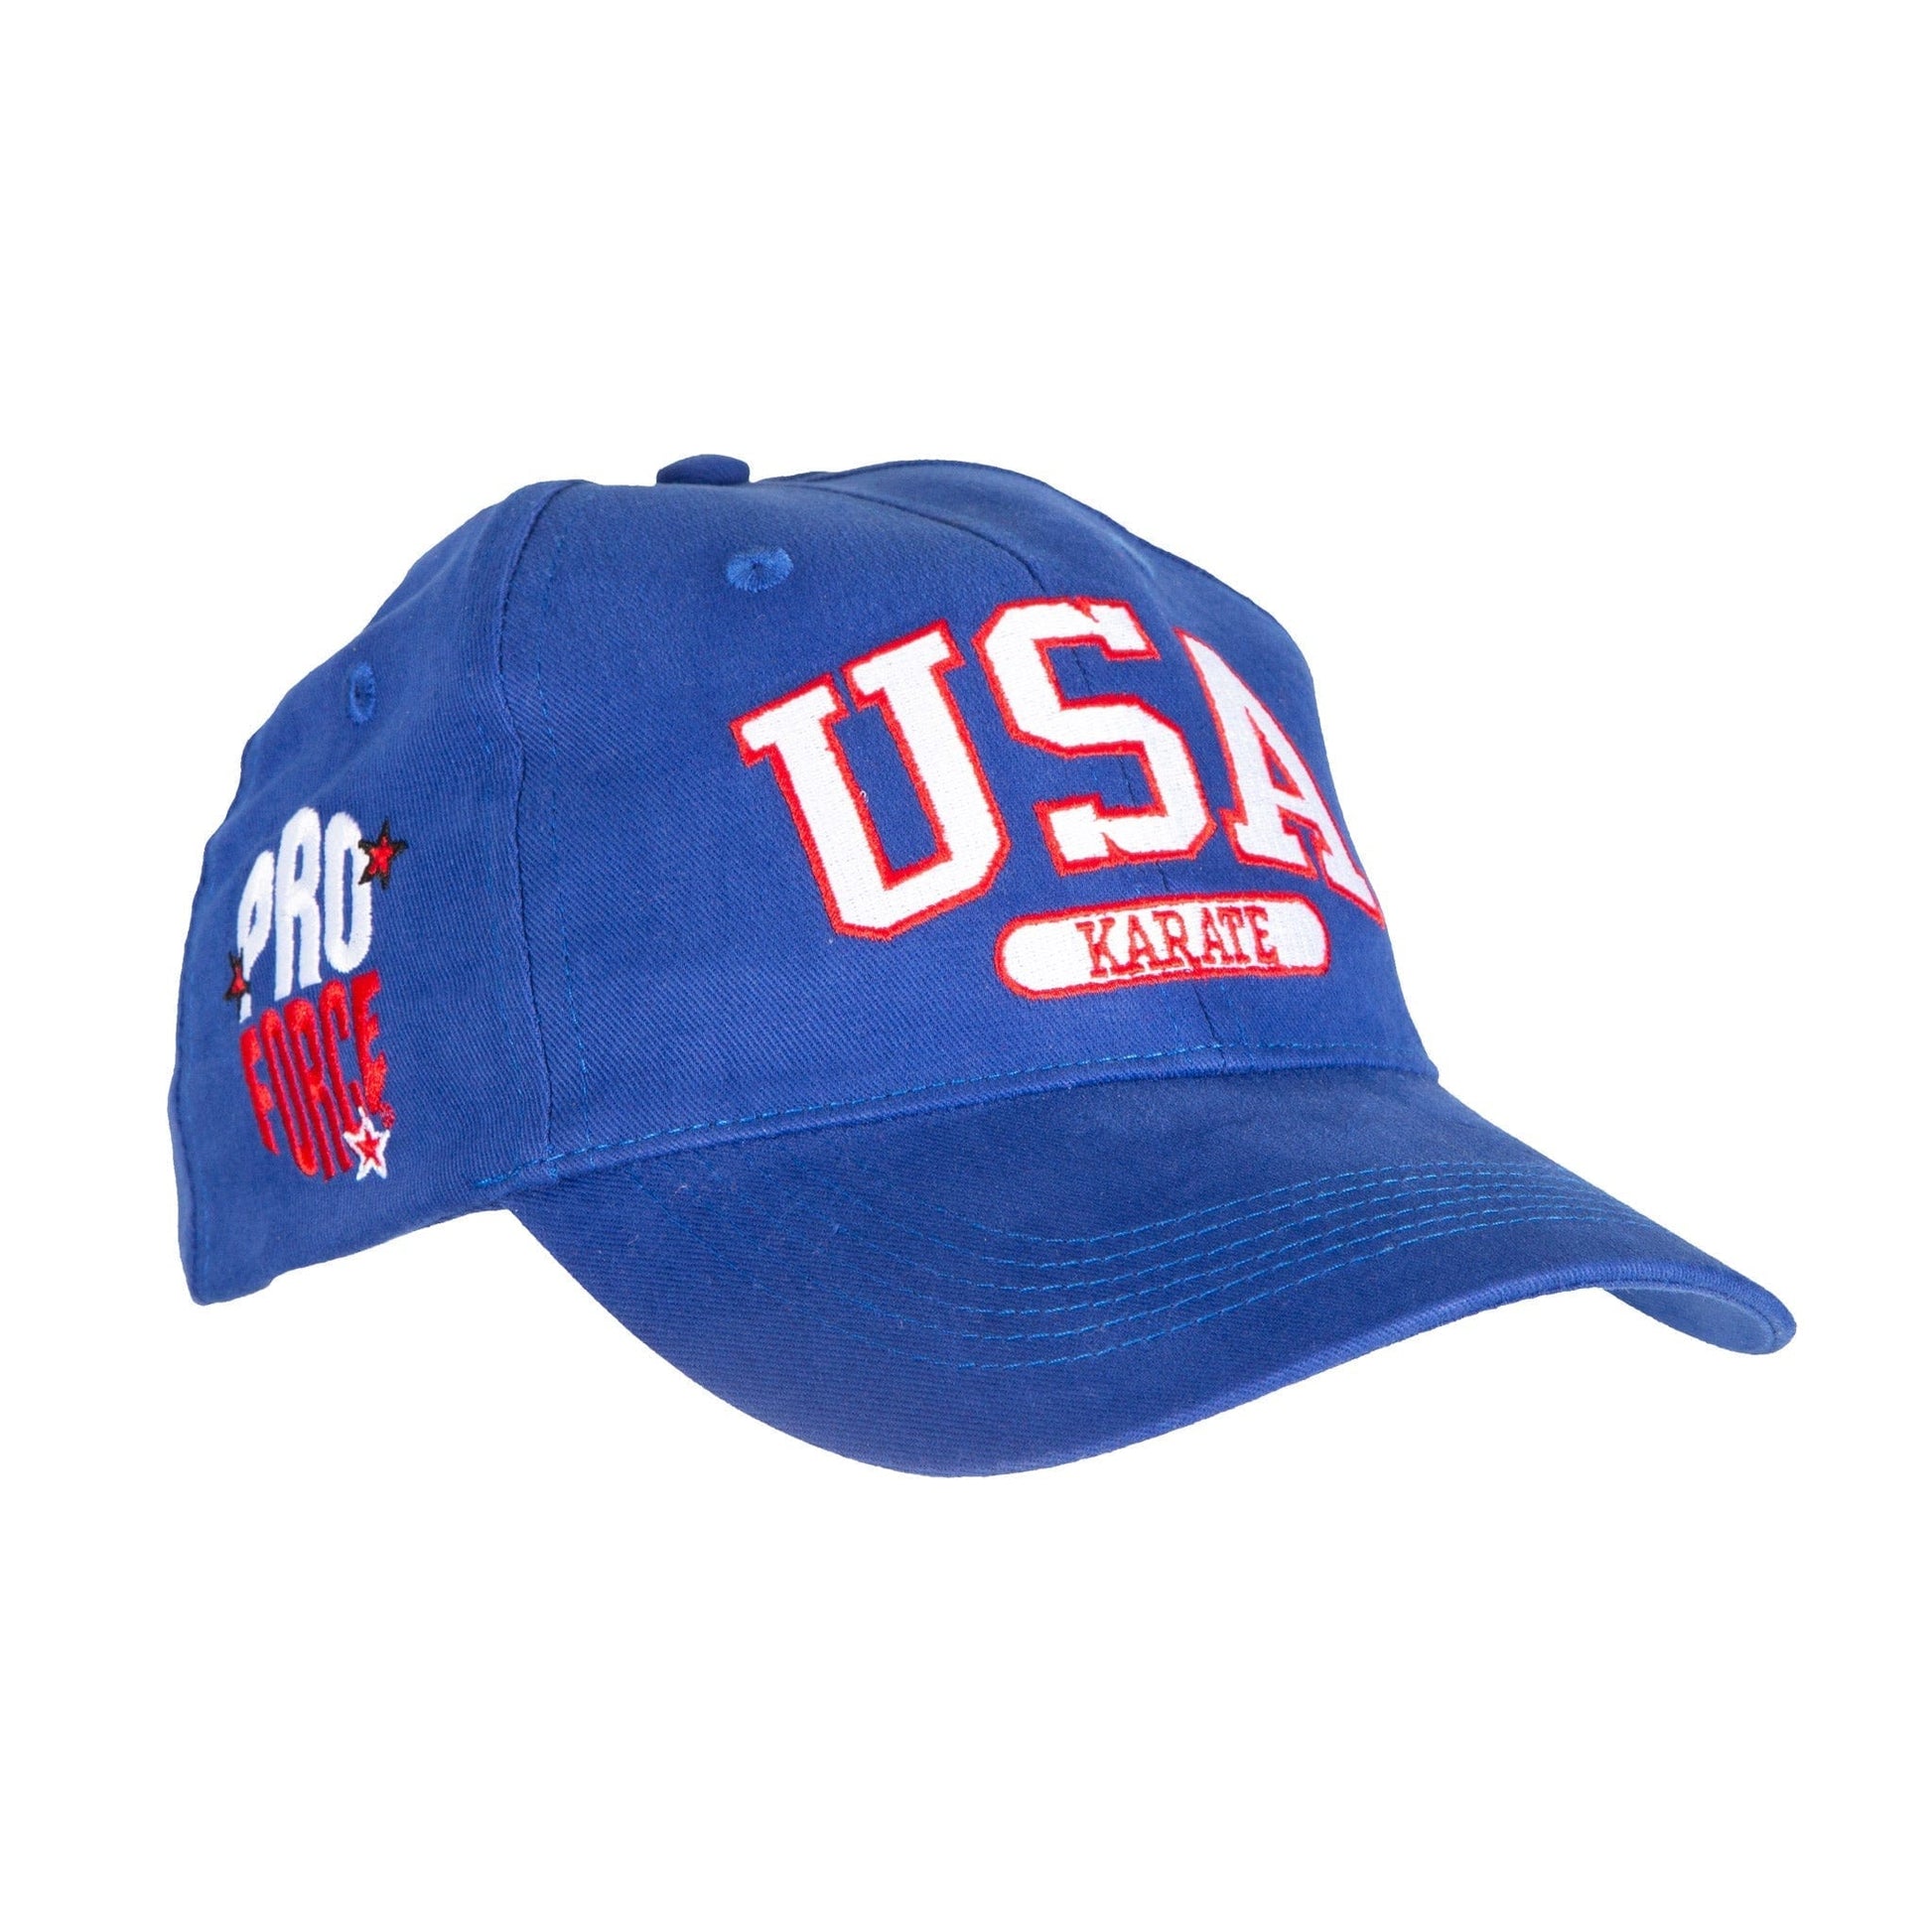 ProForce sporting goods adjustable / blue ProForce USA Baseball Karate Martial Art Hats